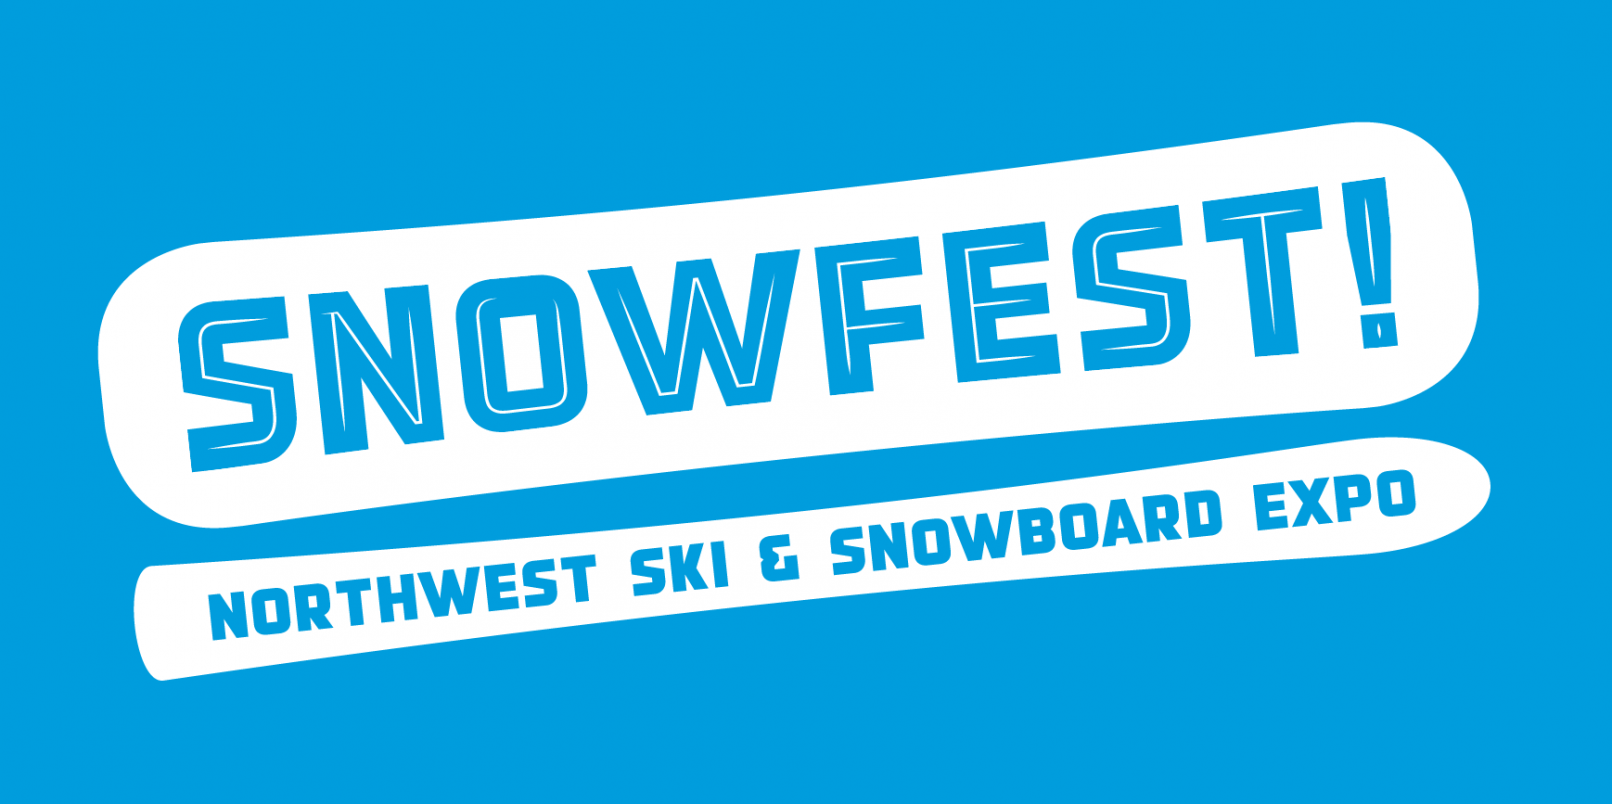 SnowFest! Northwest Ski & Snowboard Expo PROPELLER